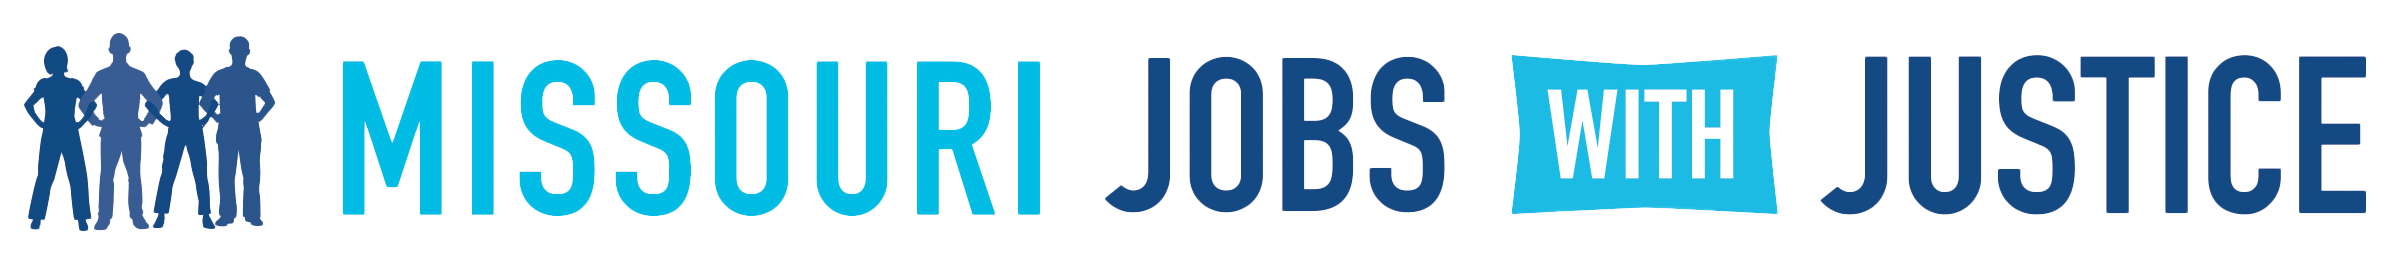 Missouri Jobs with Justice Logo